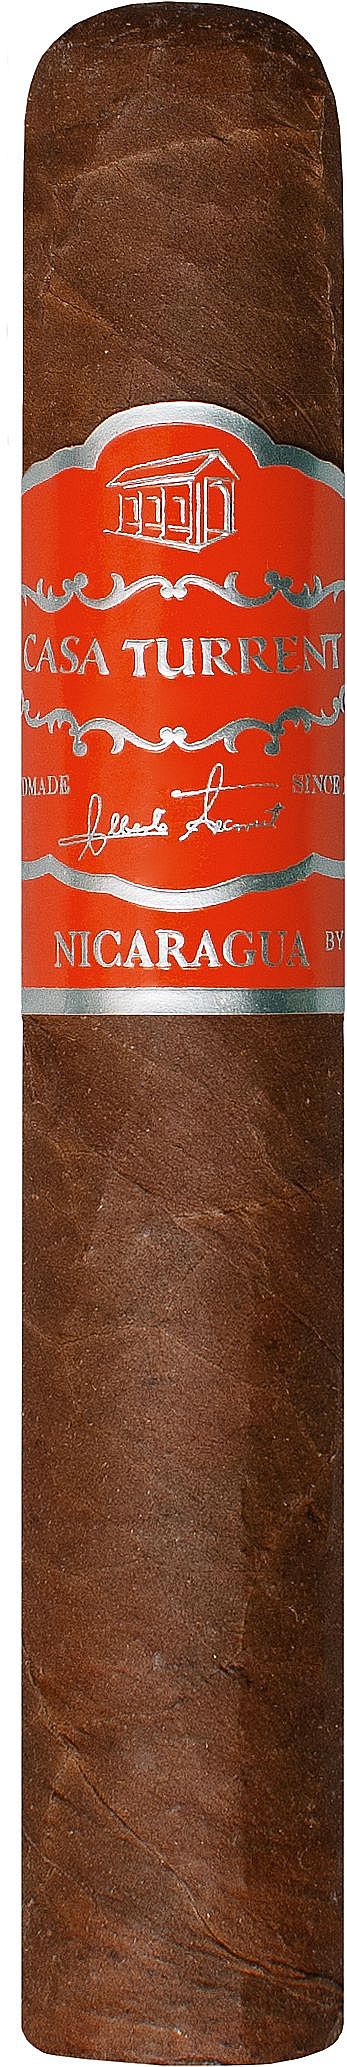 Casa Turrent Origins Nicaragua